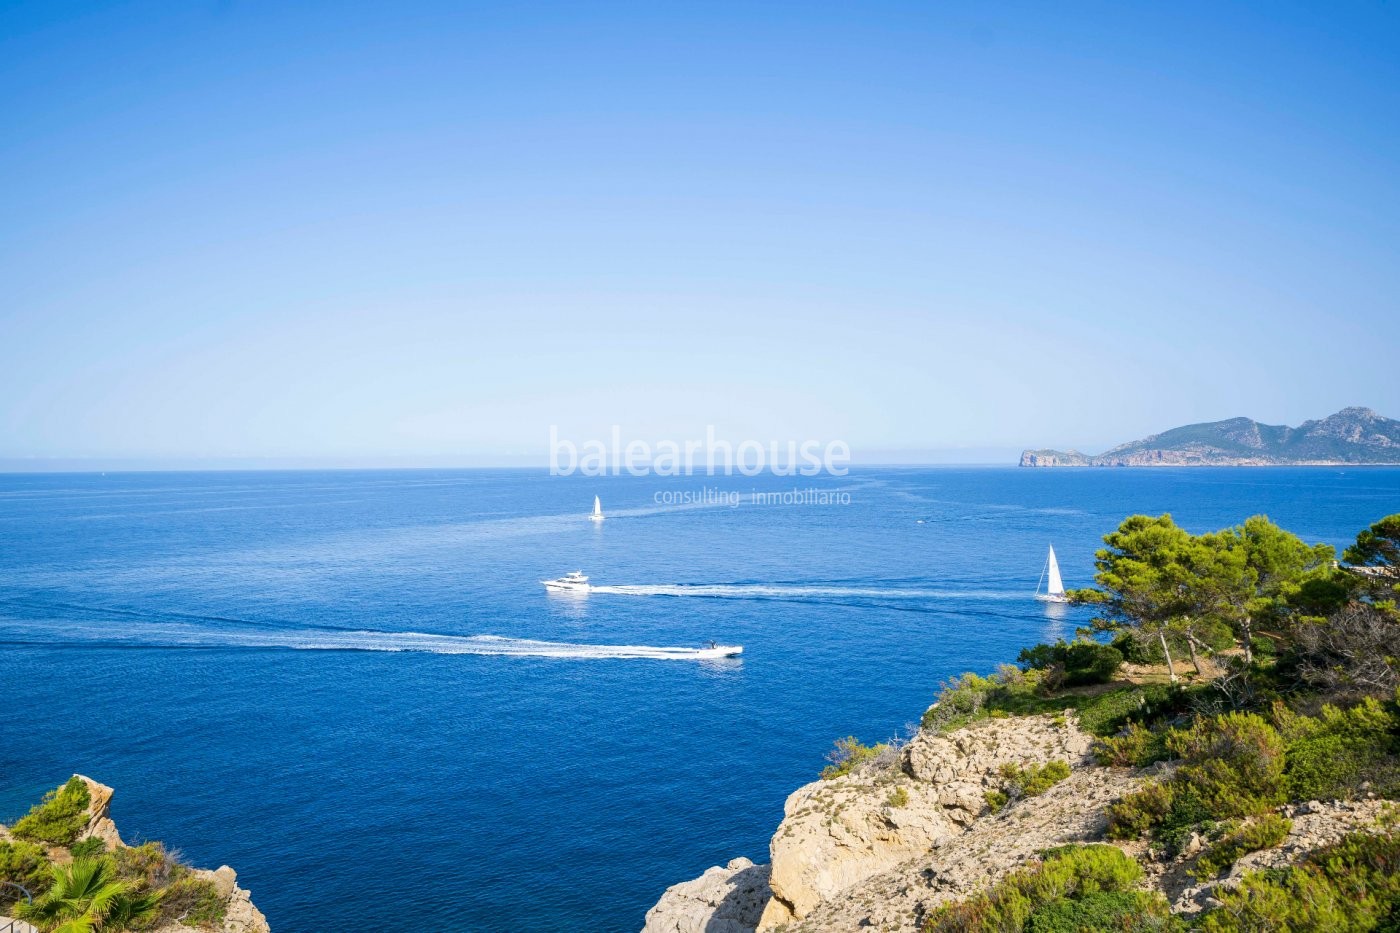 Spectacular villa with breathtaking sea views in the beautiful Puerto de Andratx.